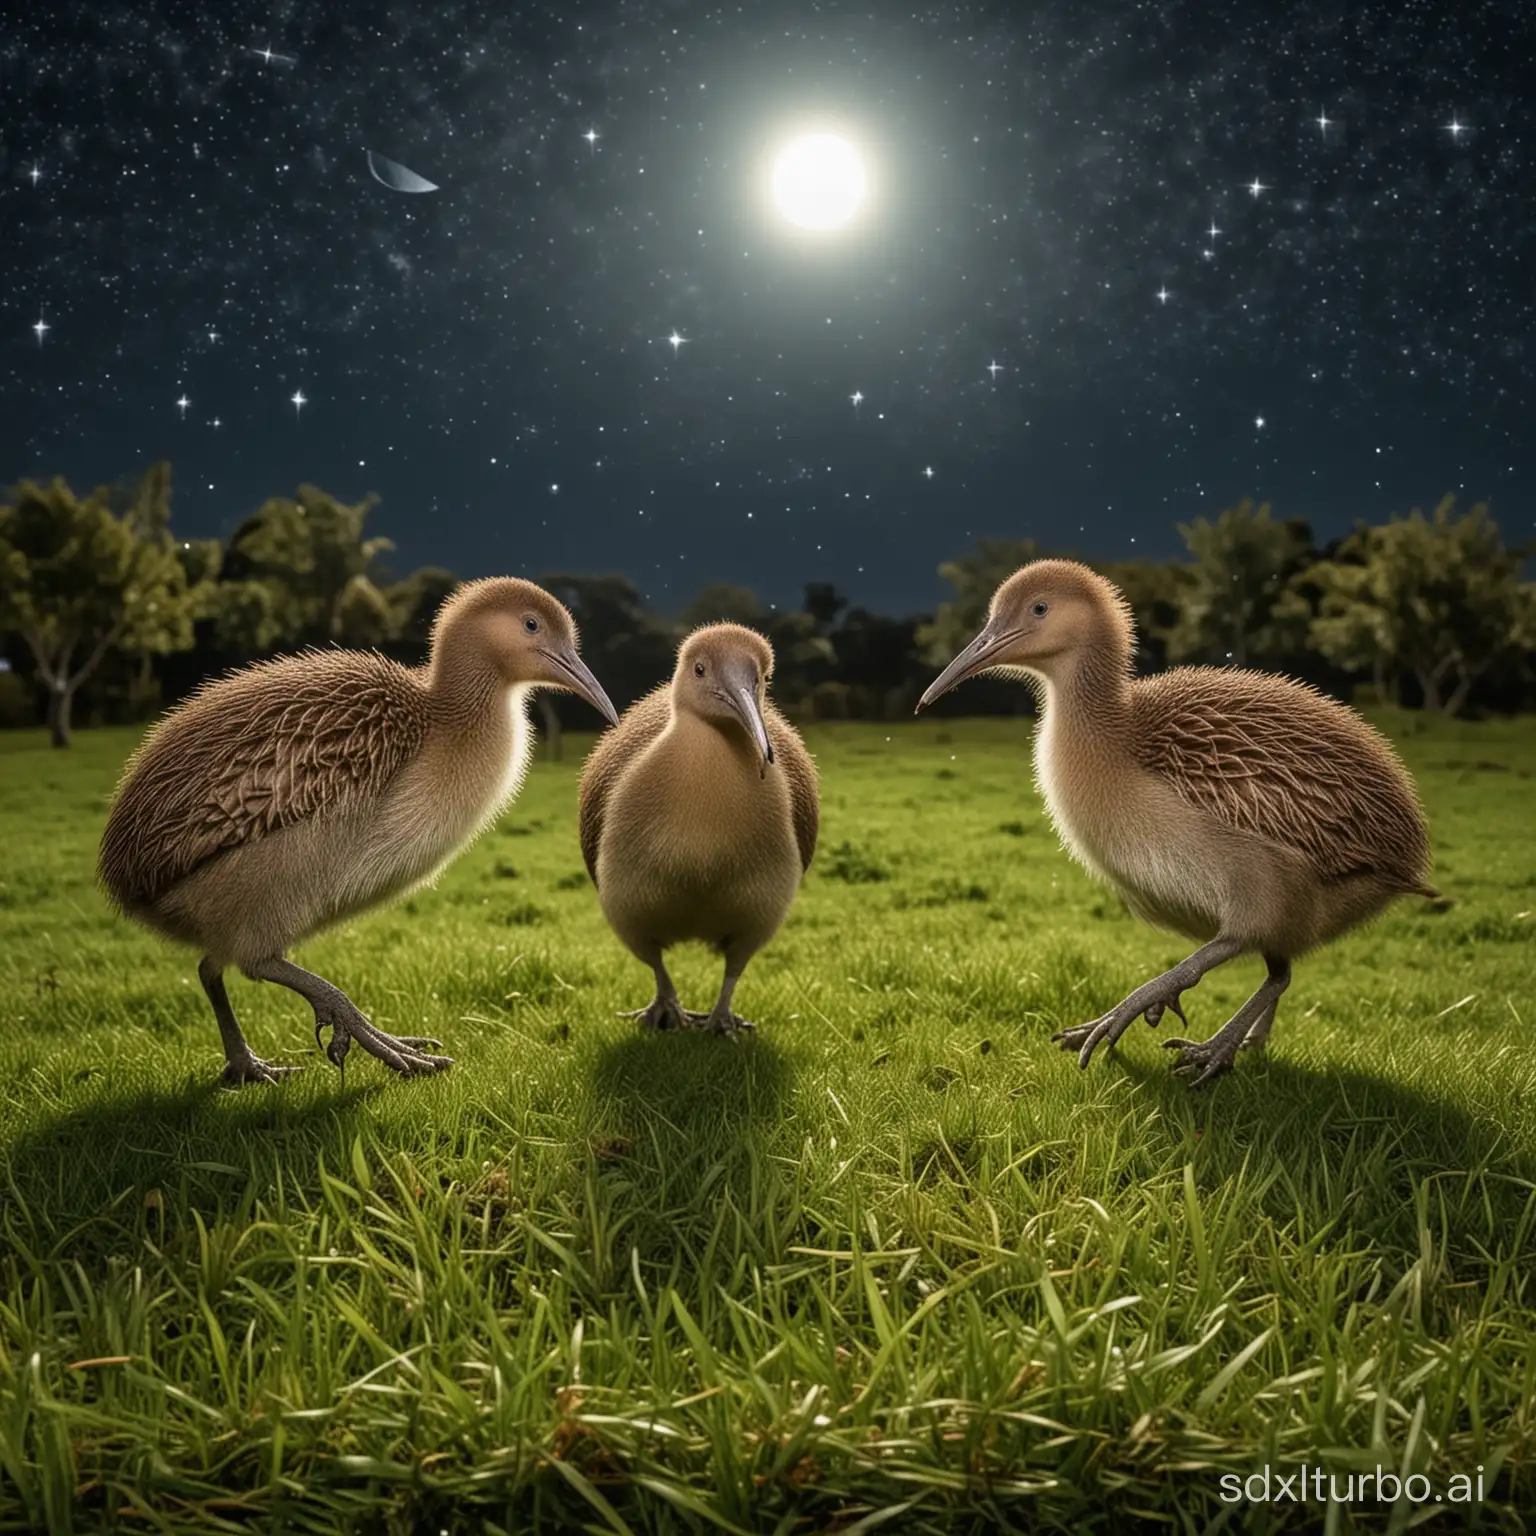 3 Kiwi birds  walking on grass, night, starry and moon